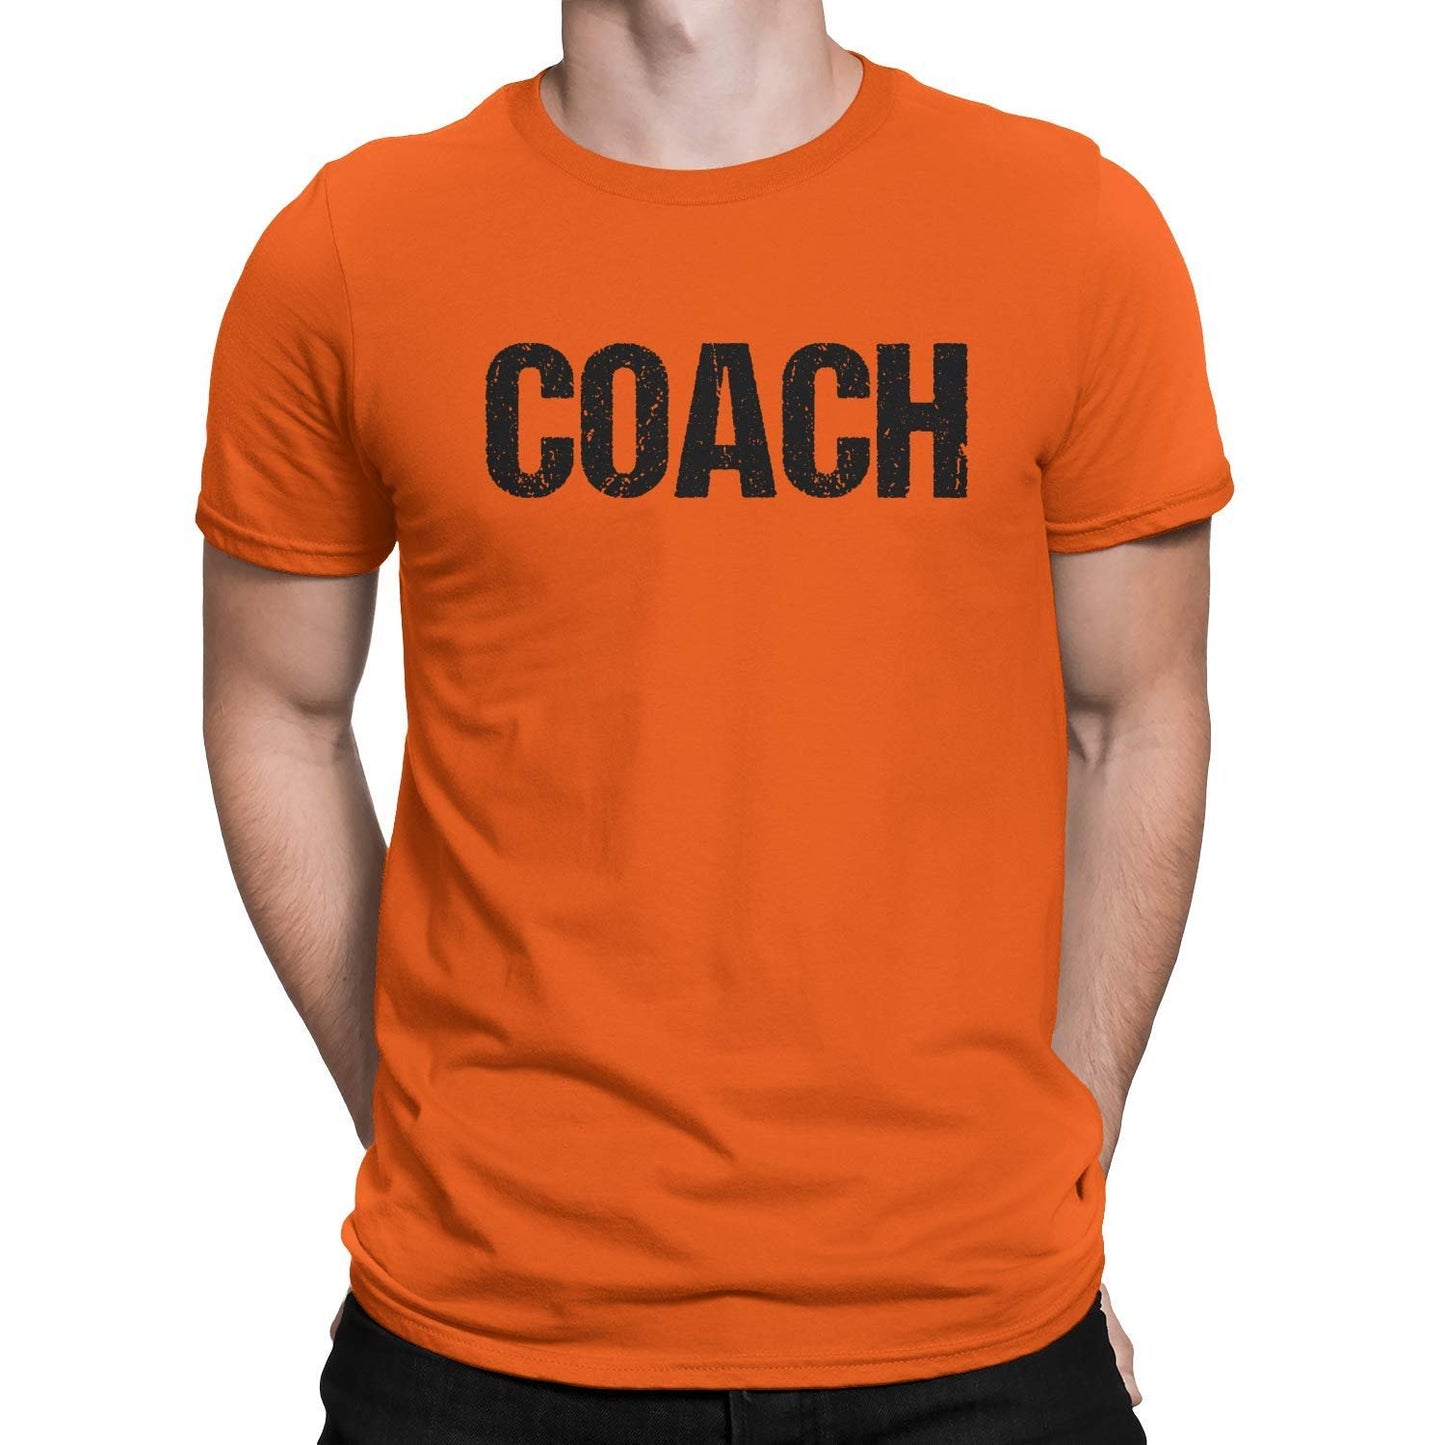 Coach T-Shirt Adult Mens Tee Shirt Front Screen Printed Coaching Tshirt Orange & Black